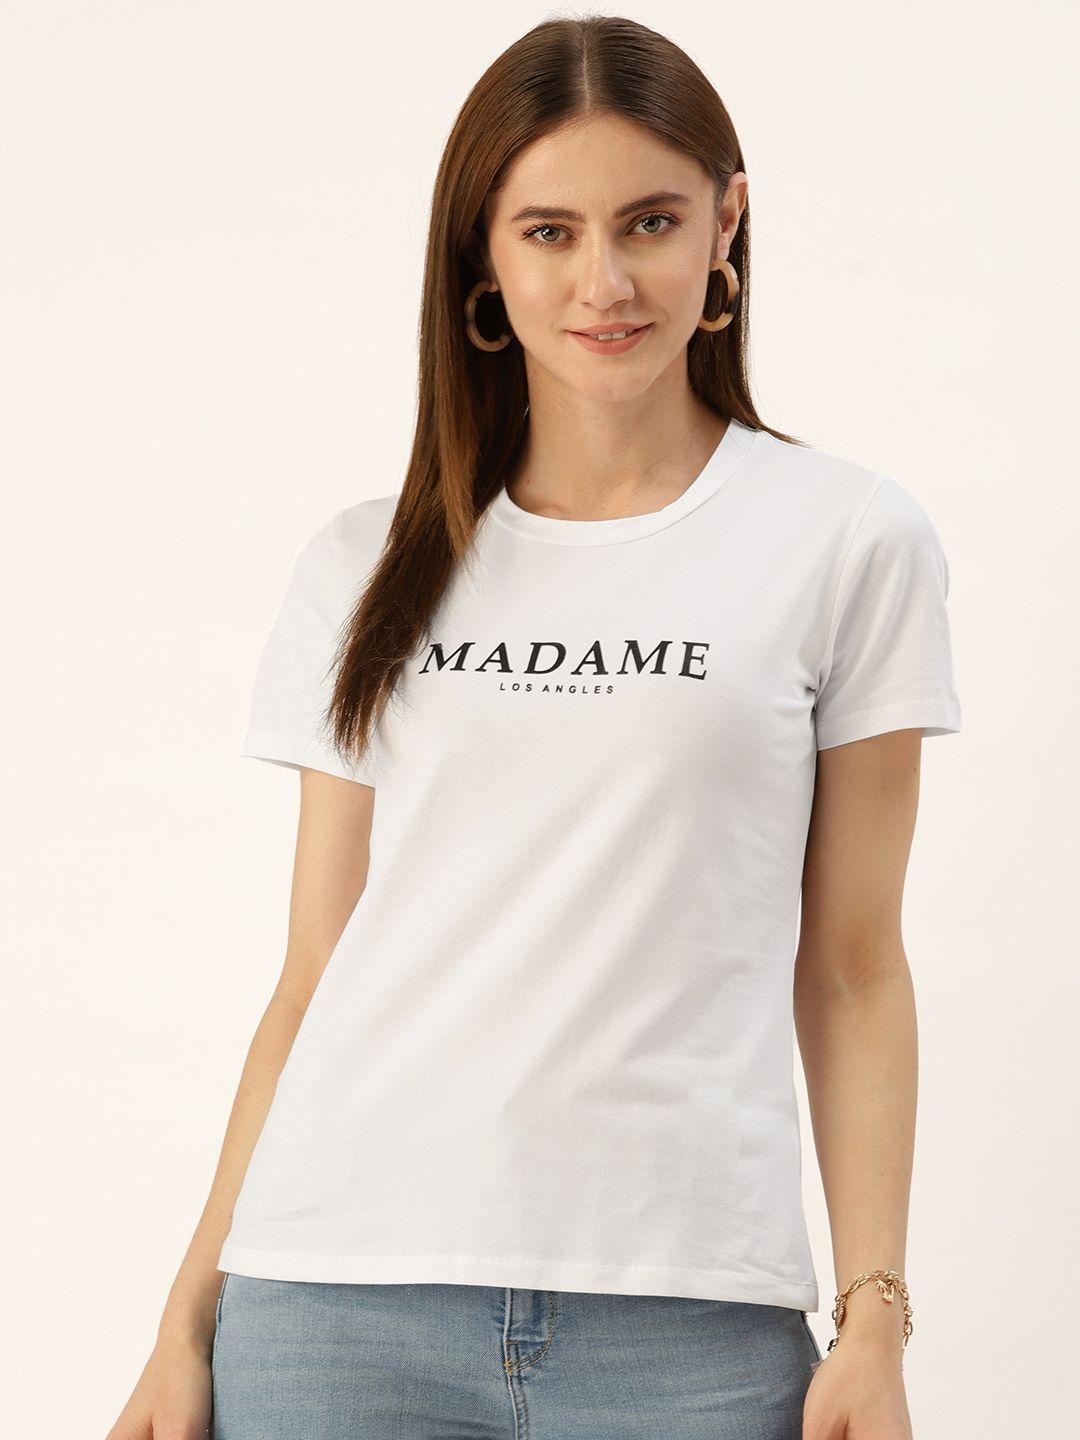 madame brand logo printed pure cotton t-shirt